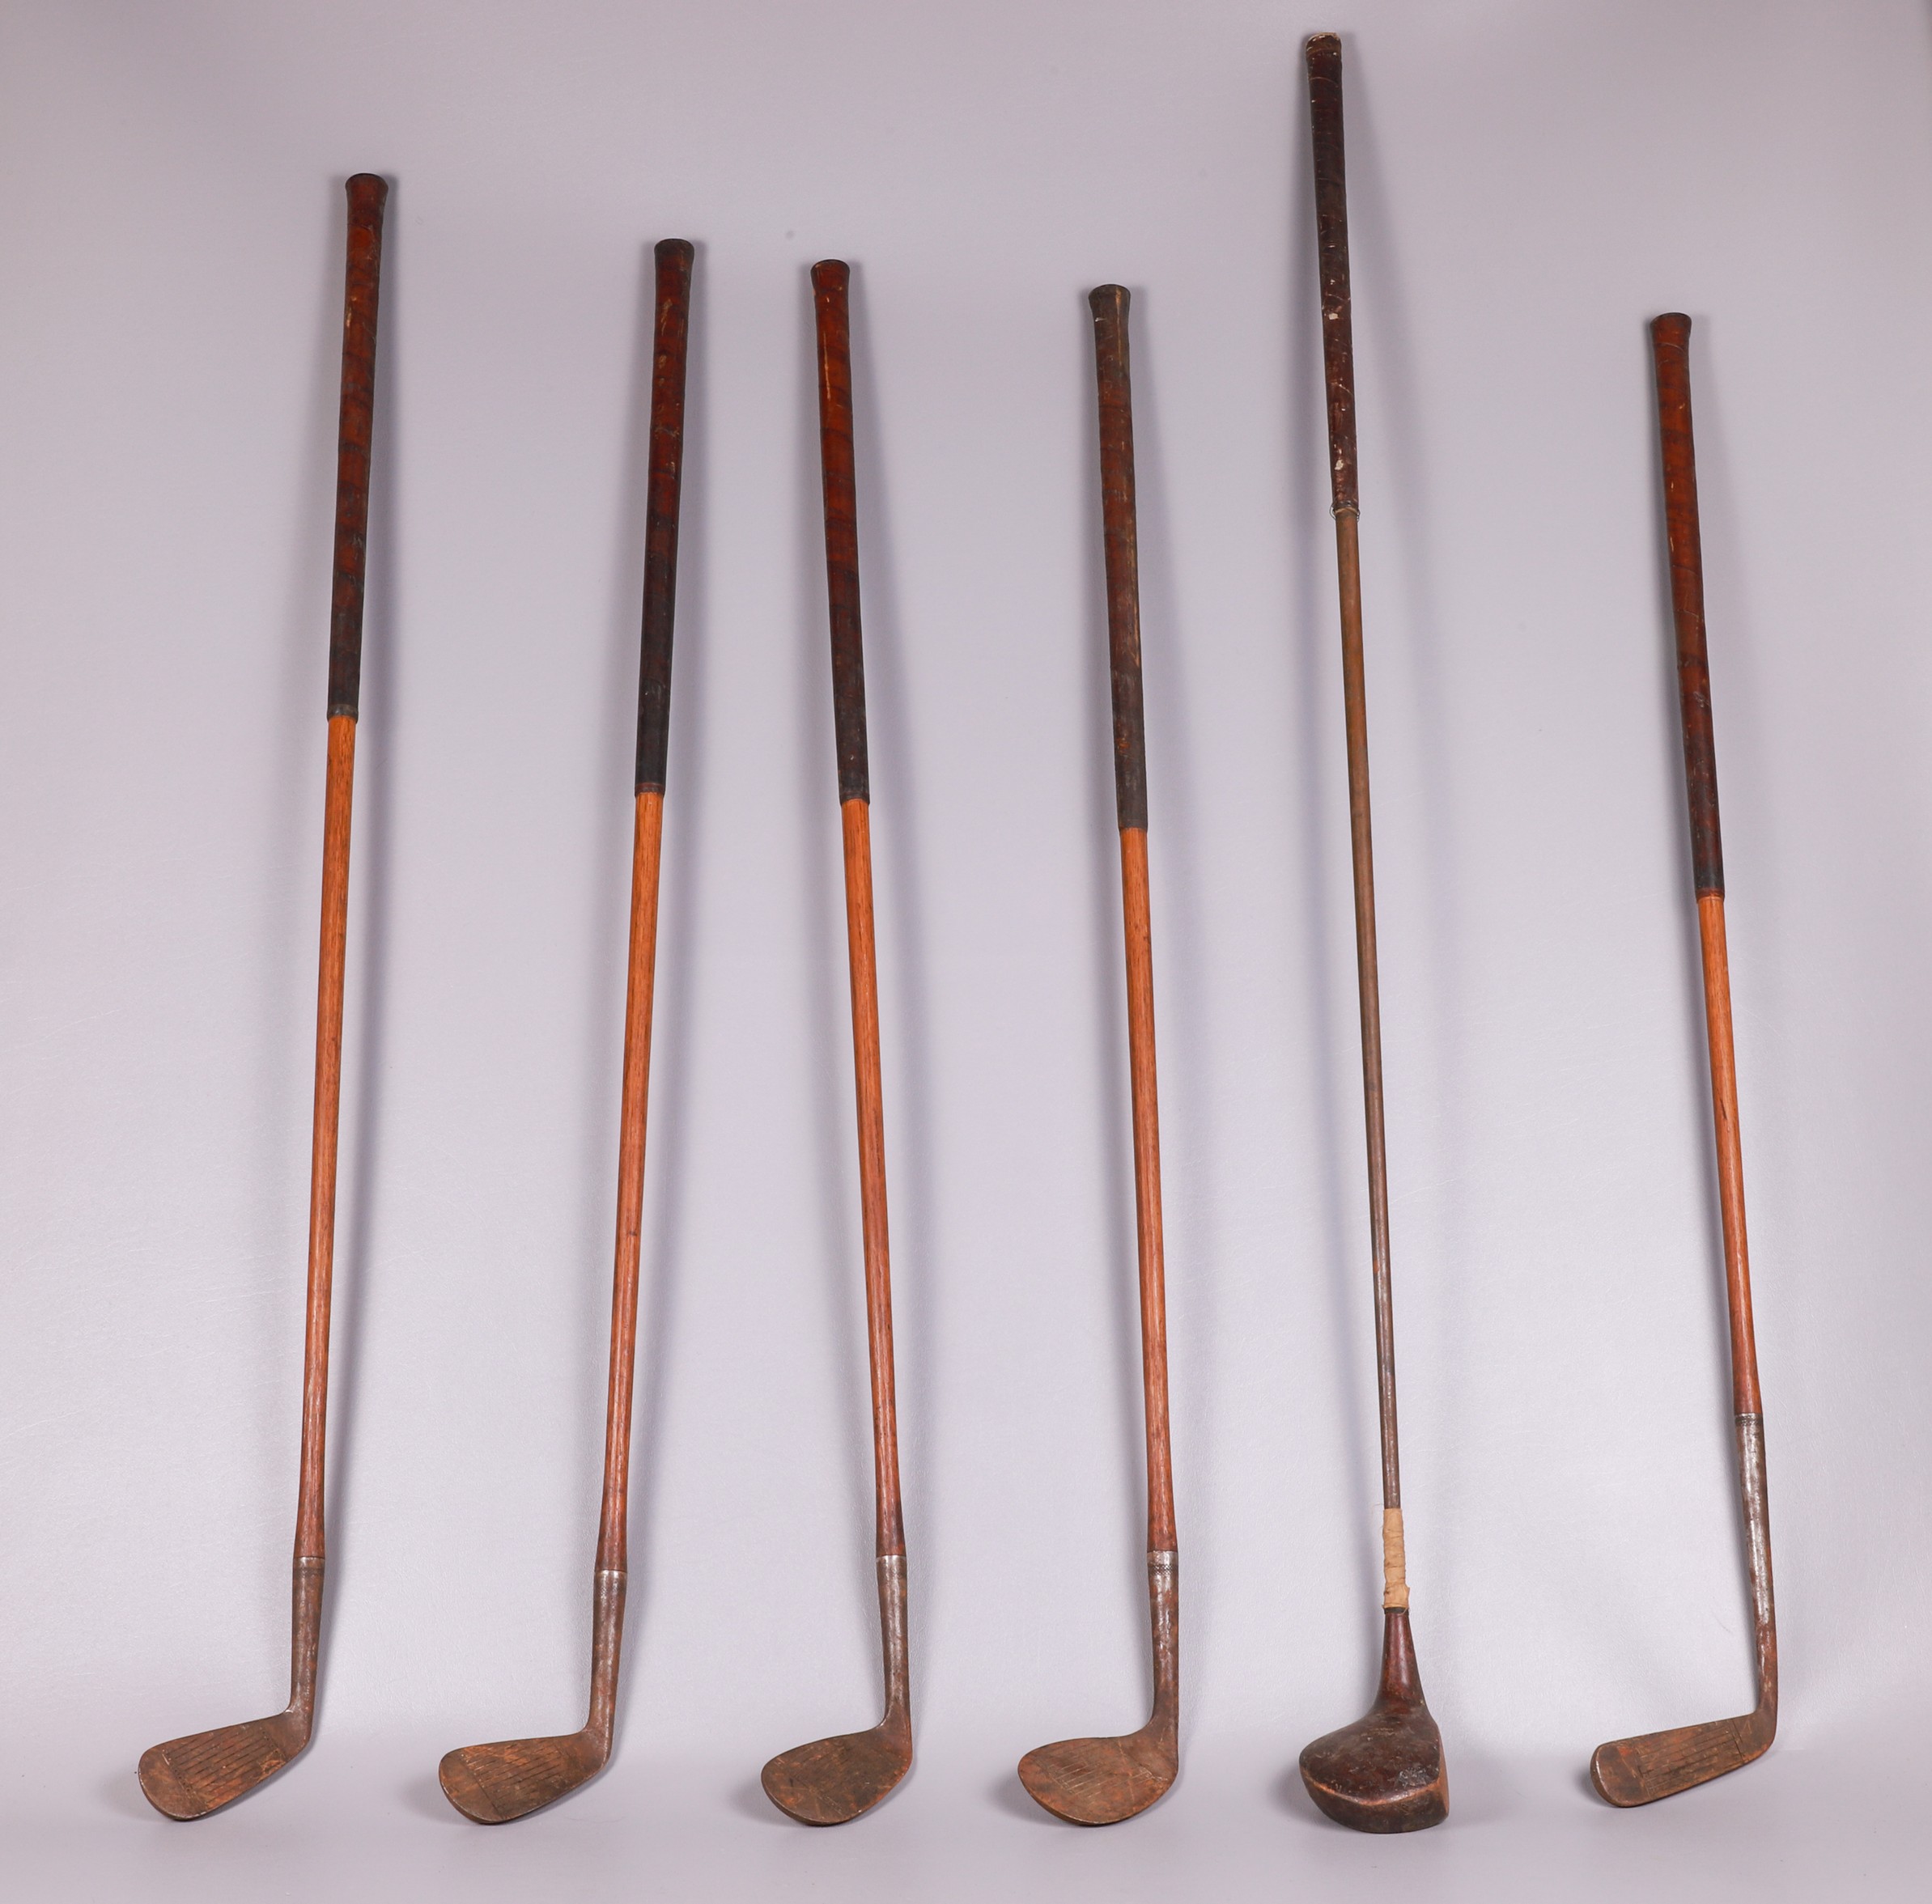  6 Vintage golf clubs wood shaft  3b5bbd